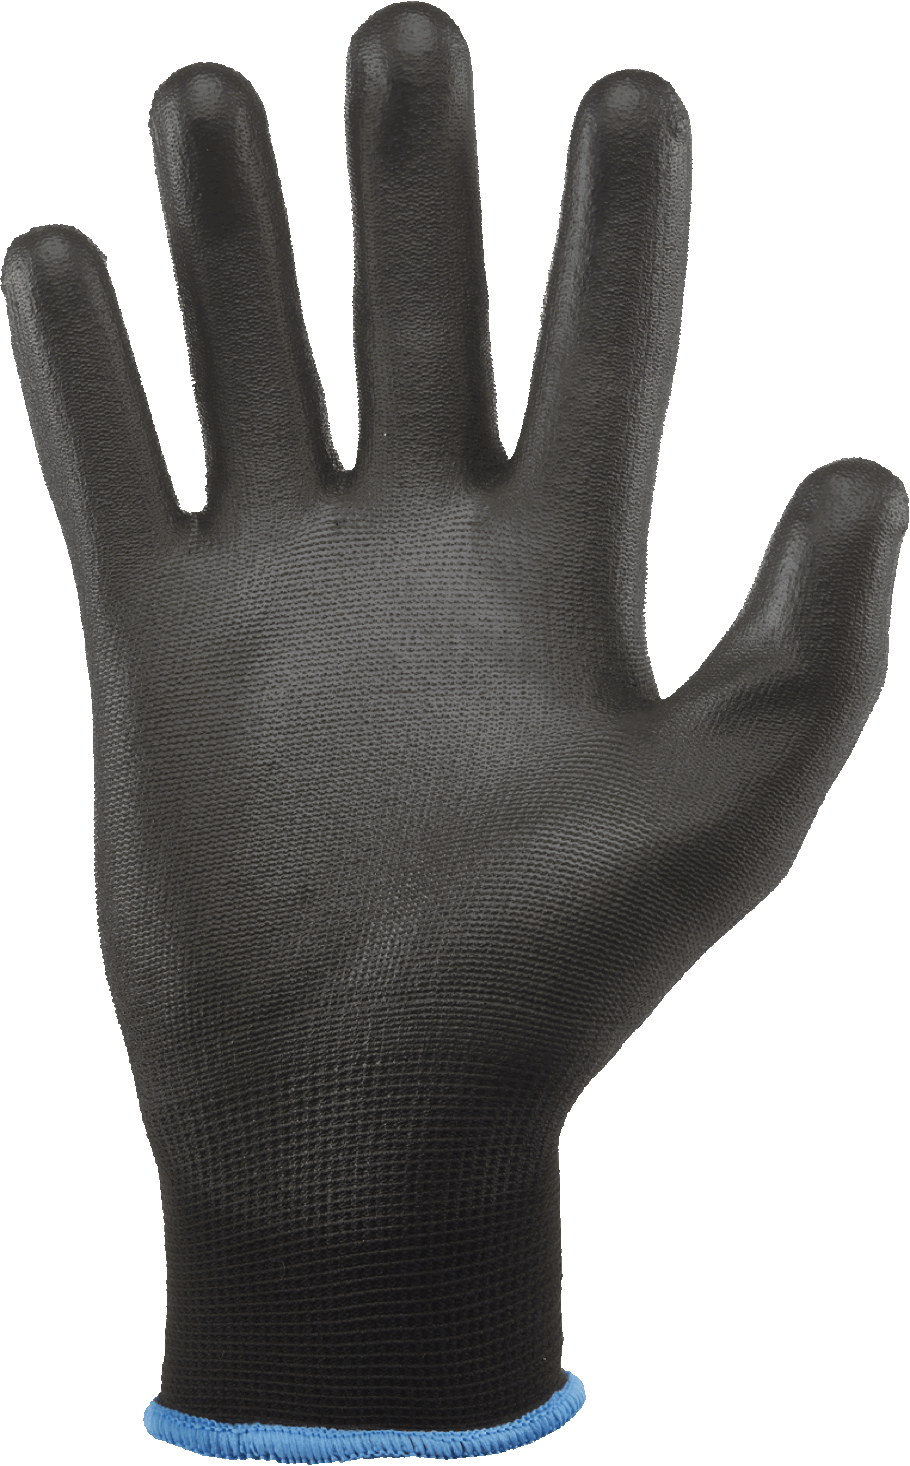 Lowest Price: GORILLA GRIP Never Slip Gloves